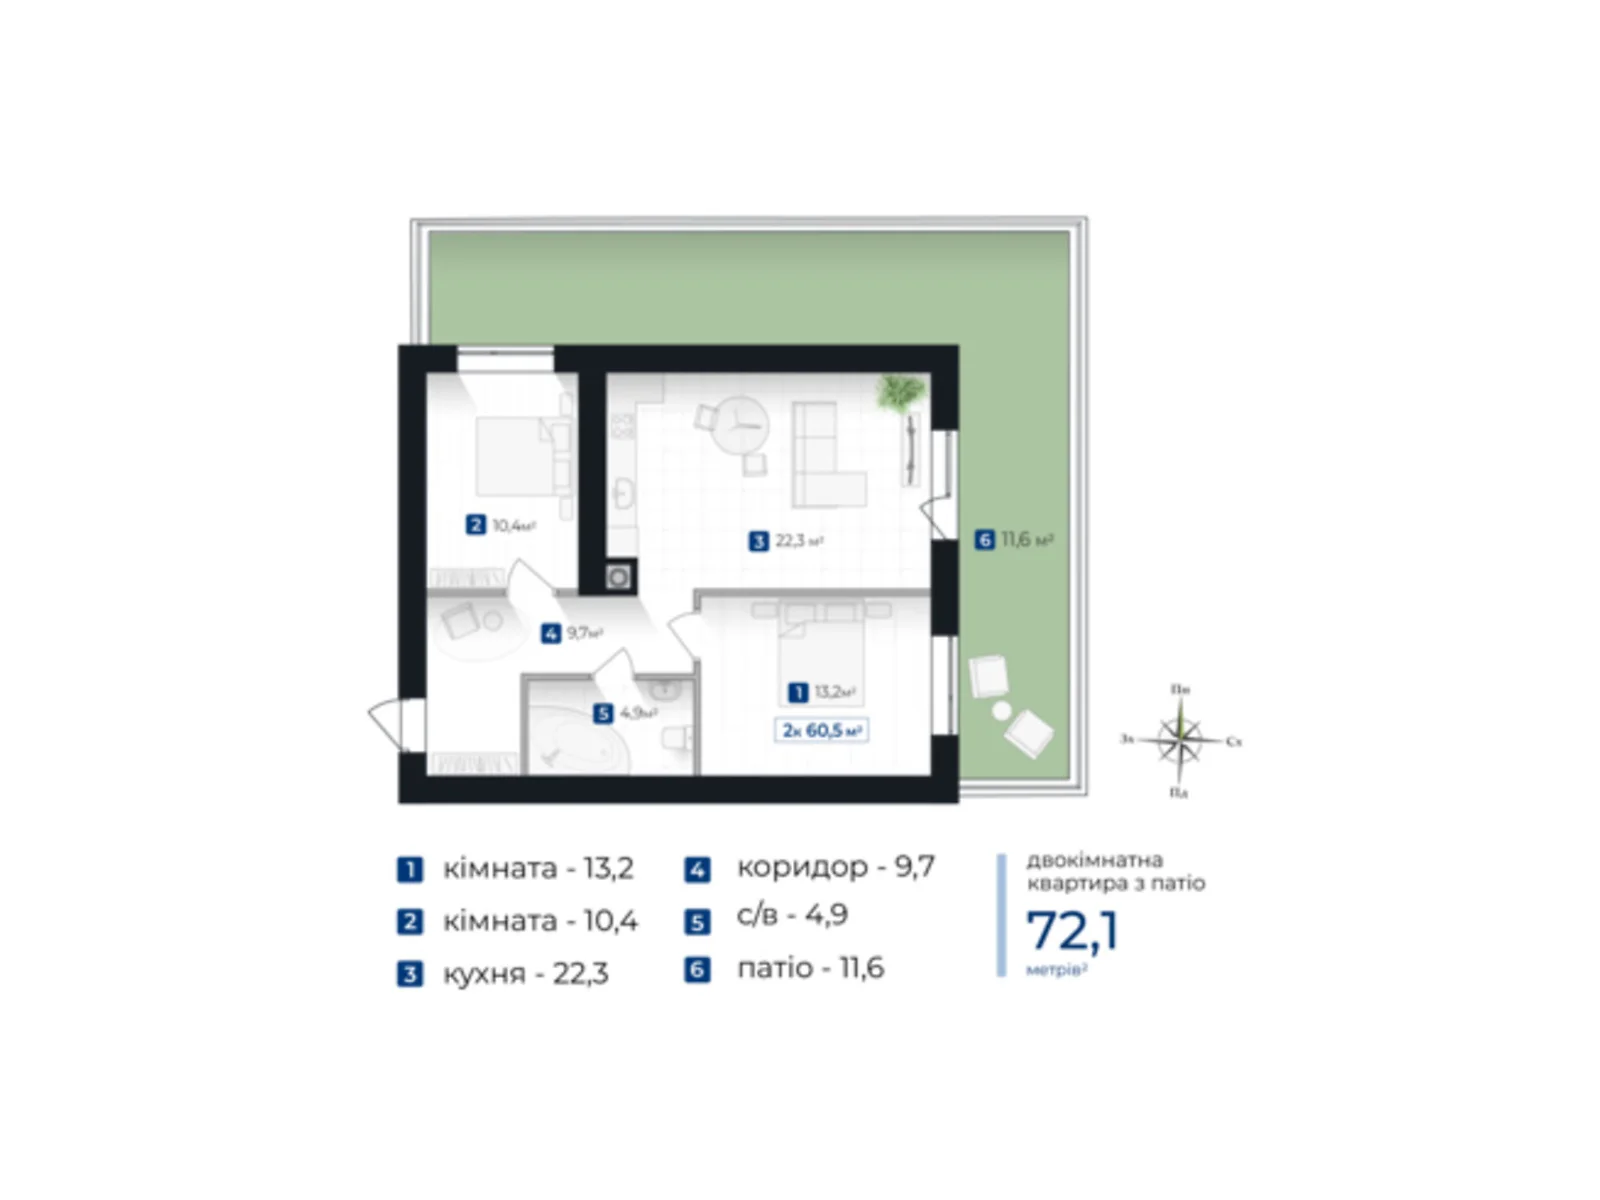 Продается 2-комнатная квартира 72.1 кв. м в Ивано-Франковске, цена: 61285 $